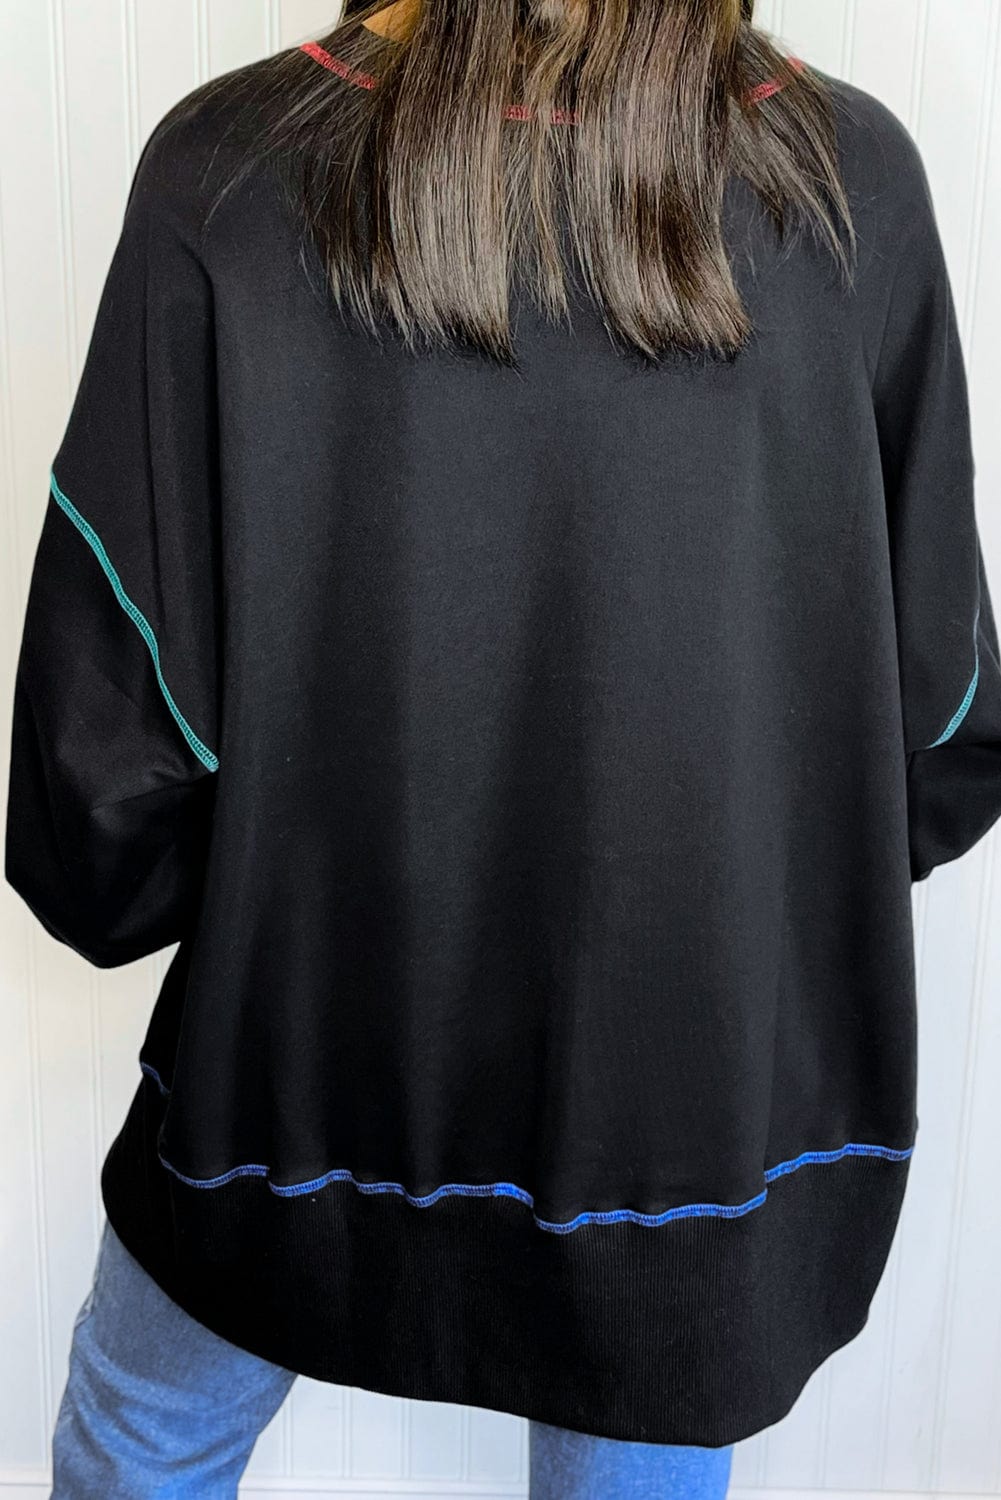 The802Gypsy  Tops/Sweatshirts & Hoodies TRAVELING GYPSY-Contrast Stitching Baggy Sweatshirt